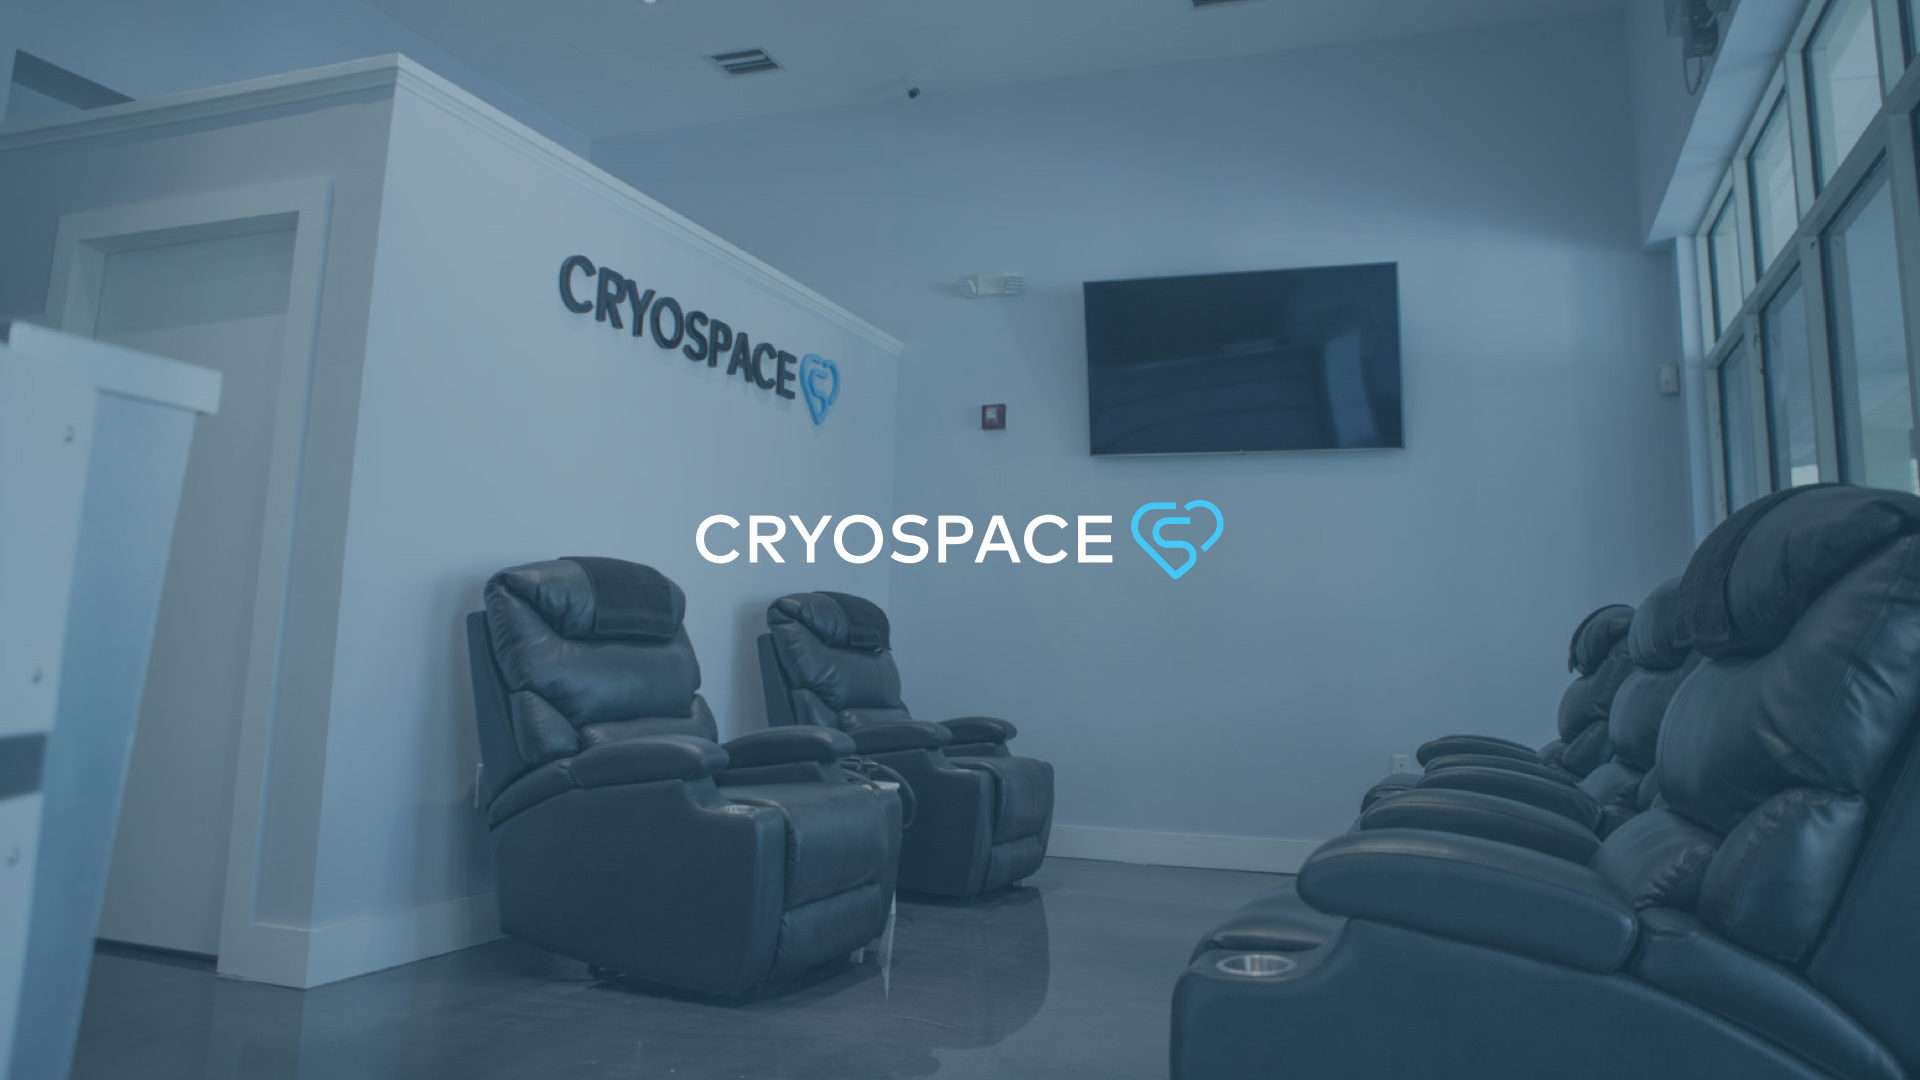 Cryospace Website Design and Development